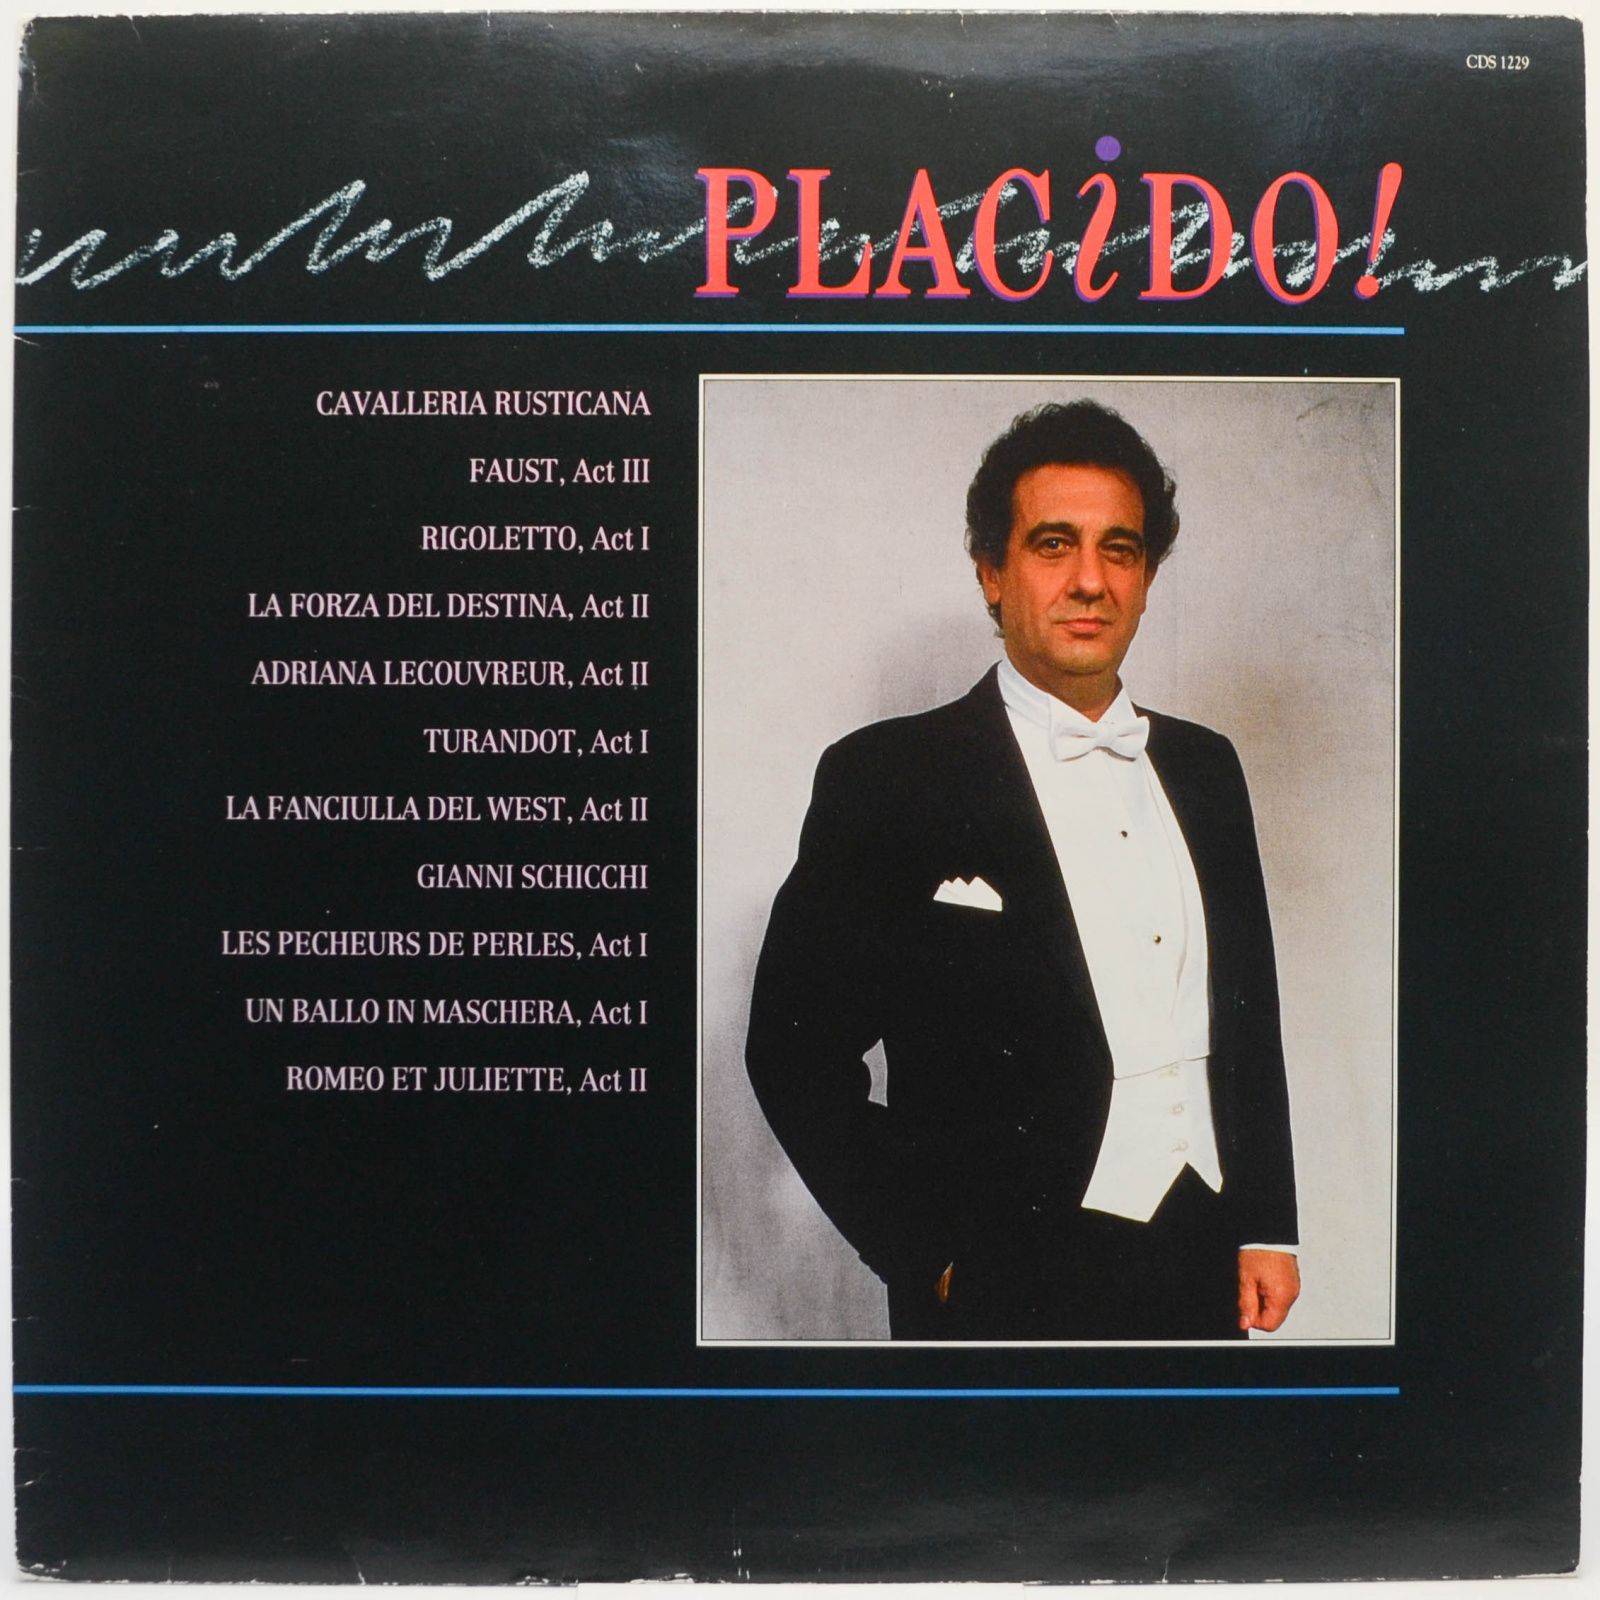 Placido Domingo — Placido!, 1988